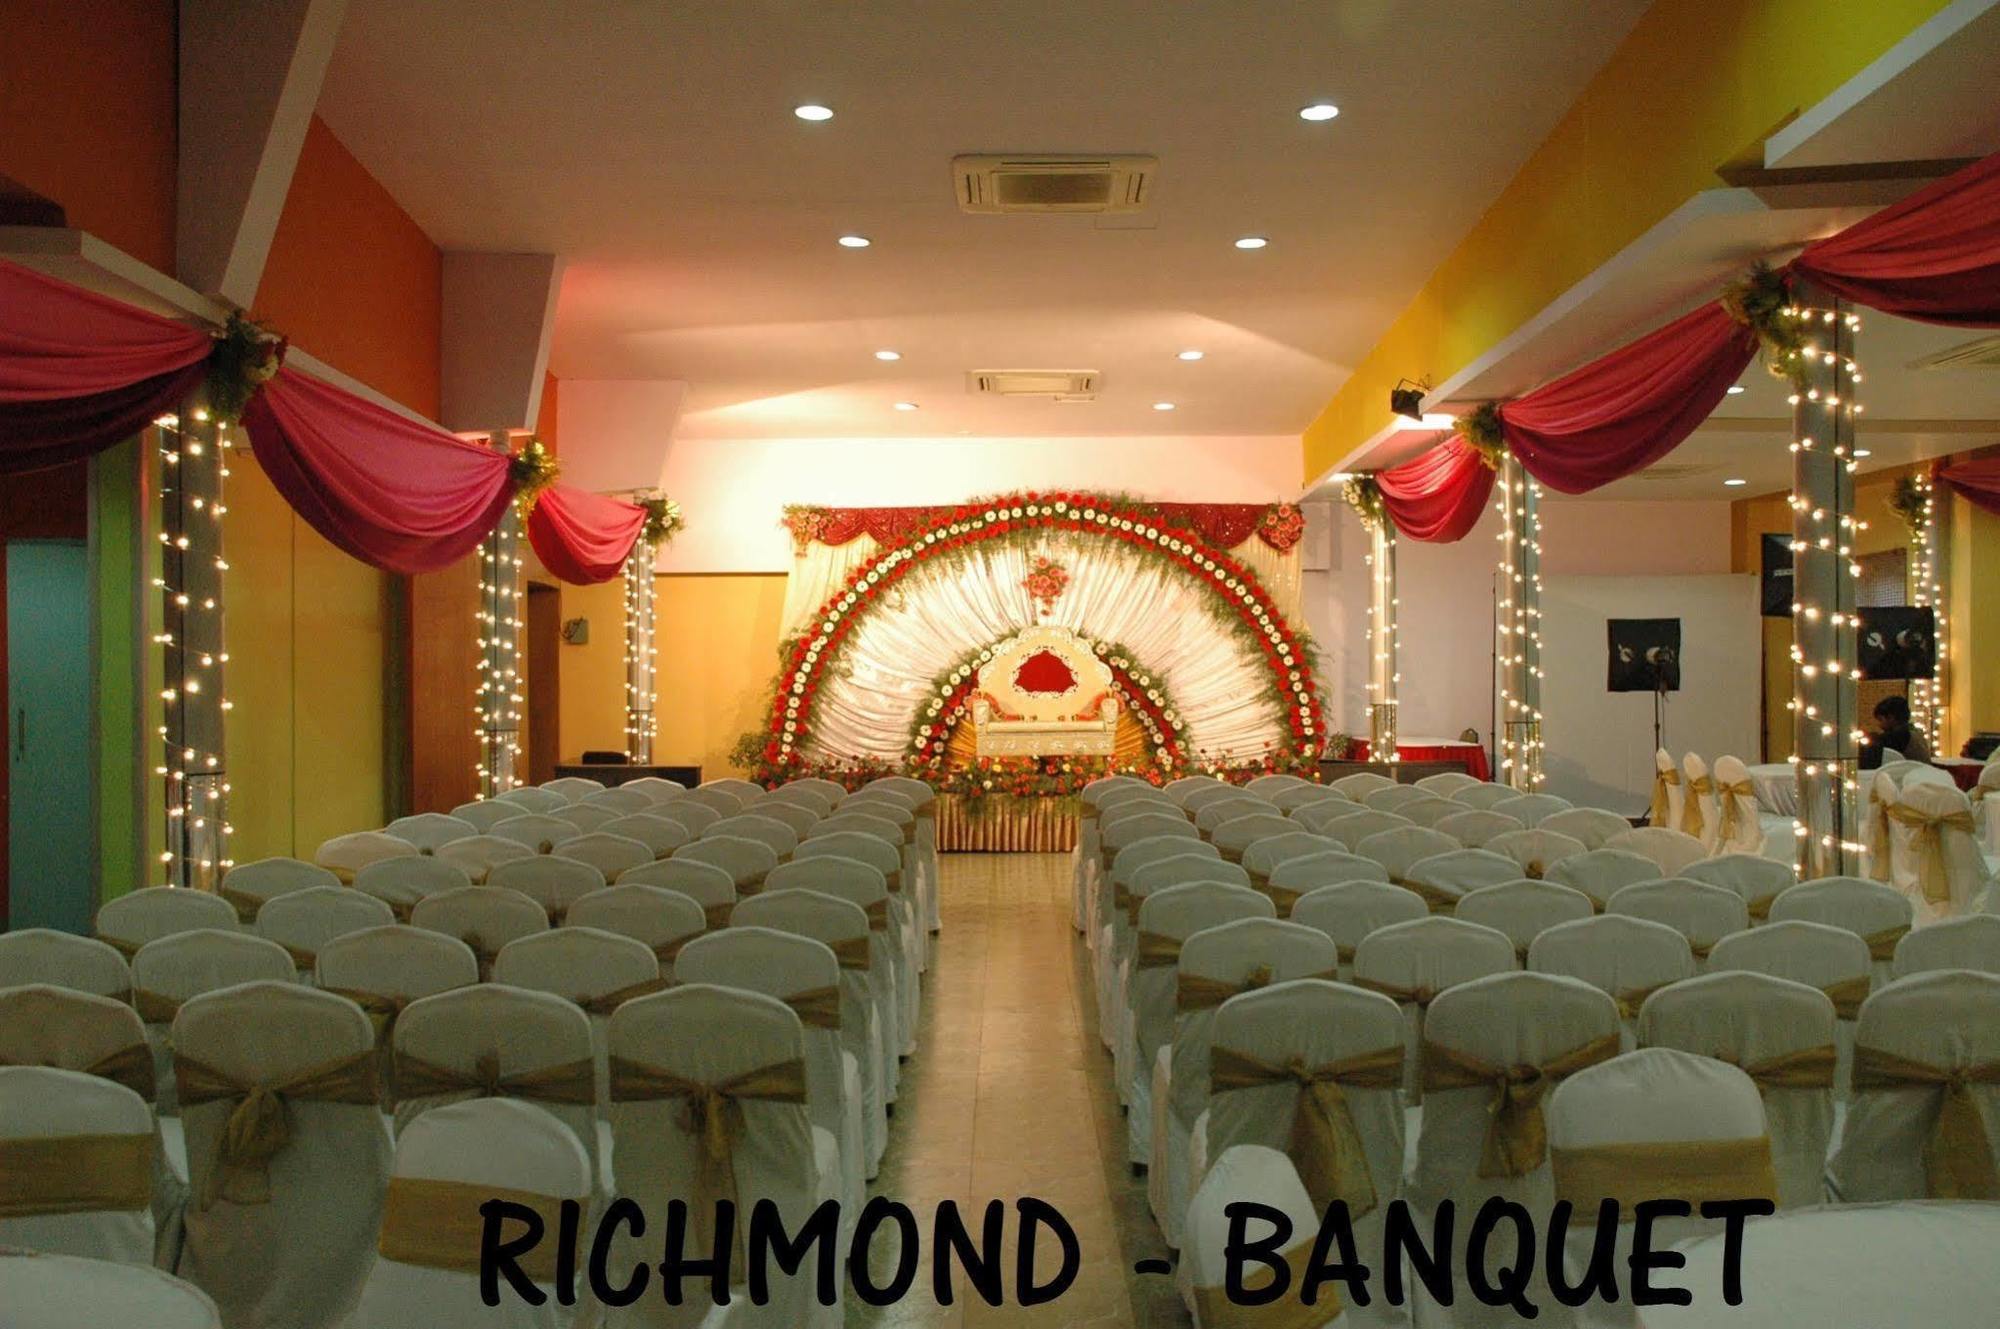 Hotel Ramanashree Richmond Bangalore Buitenkant foto